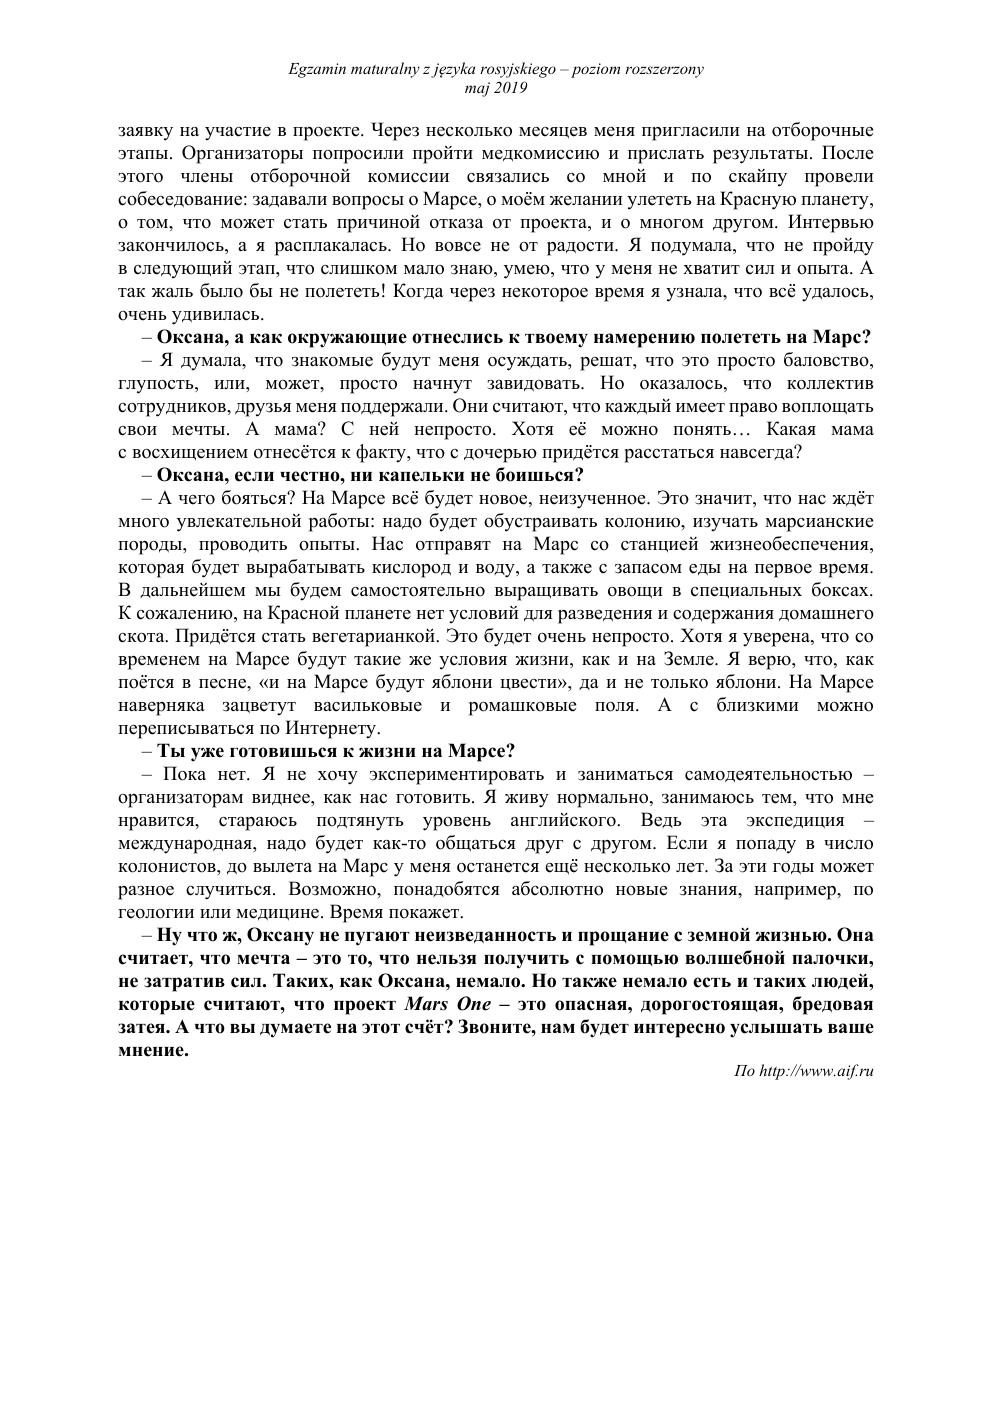 matura-2019-jezyk-rosyjski-rozszerzony-transkrypcja-3